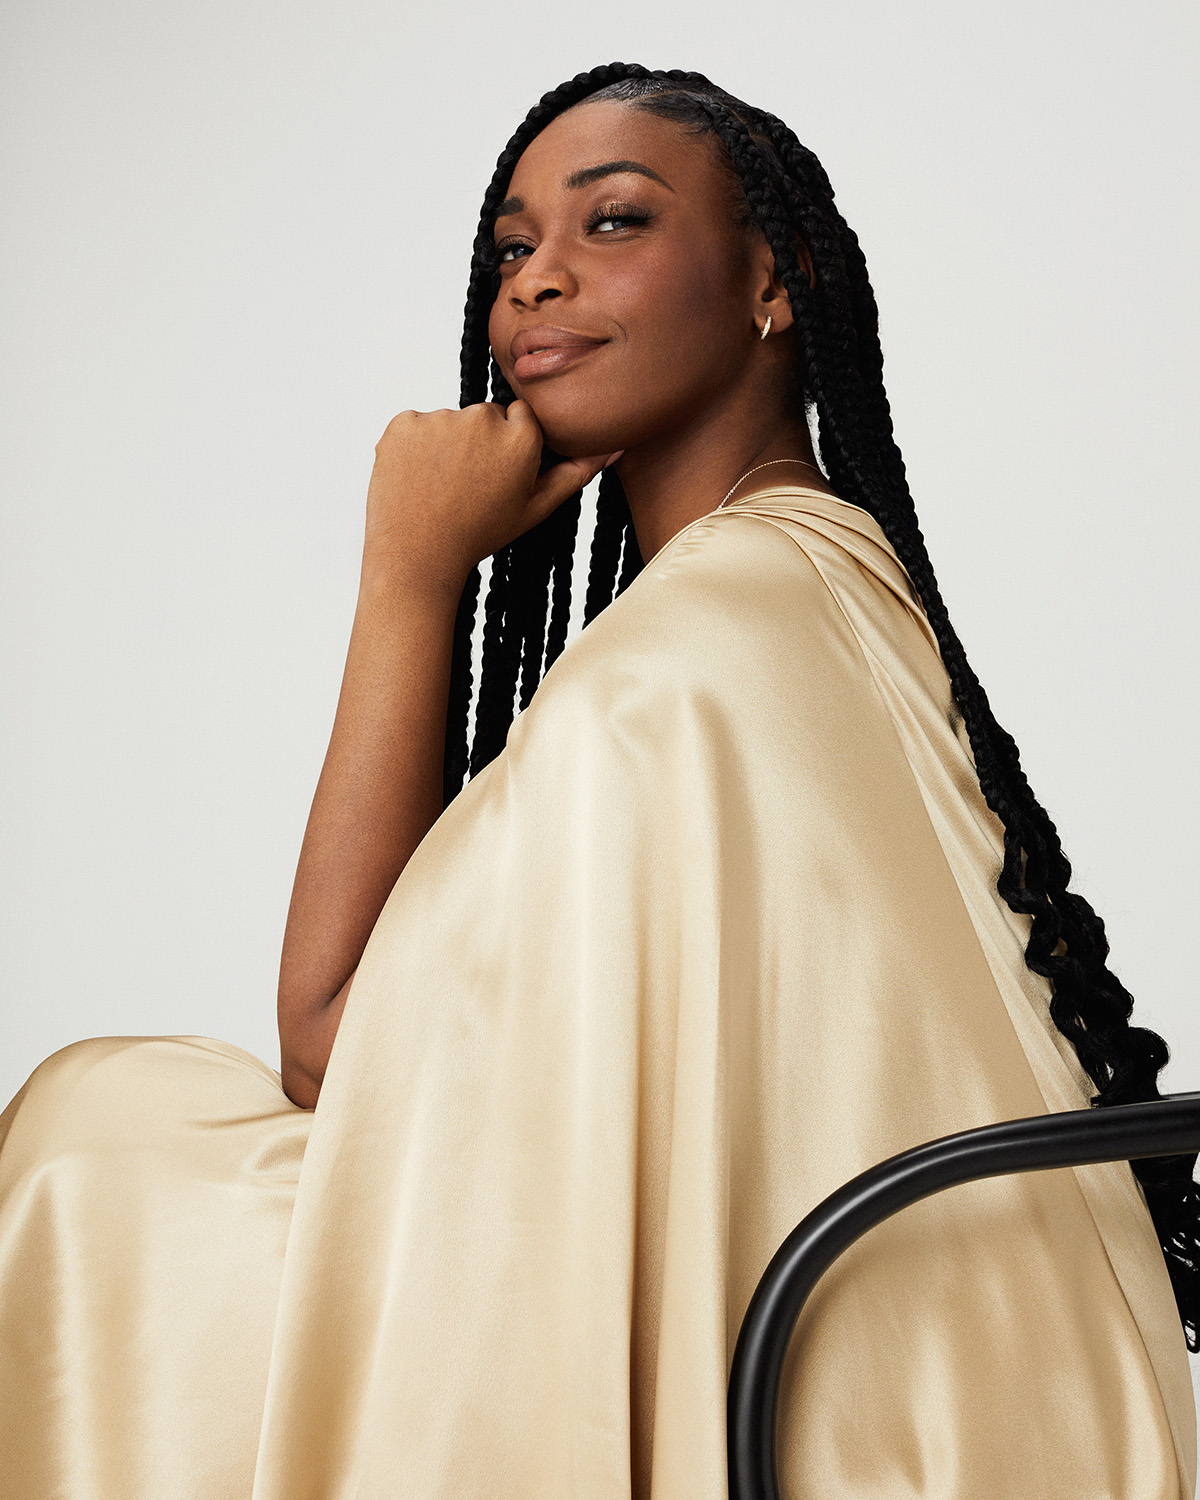 portrait of a black woman in a cream robe